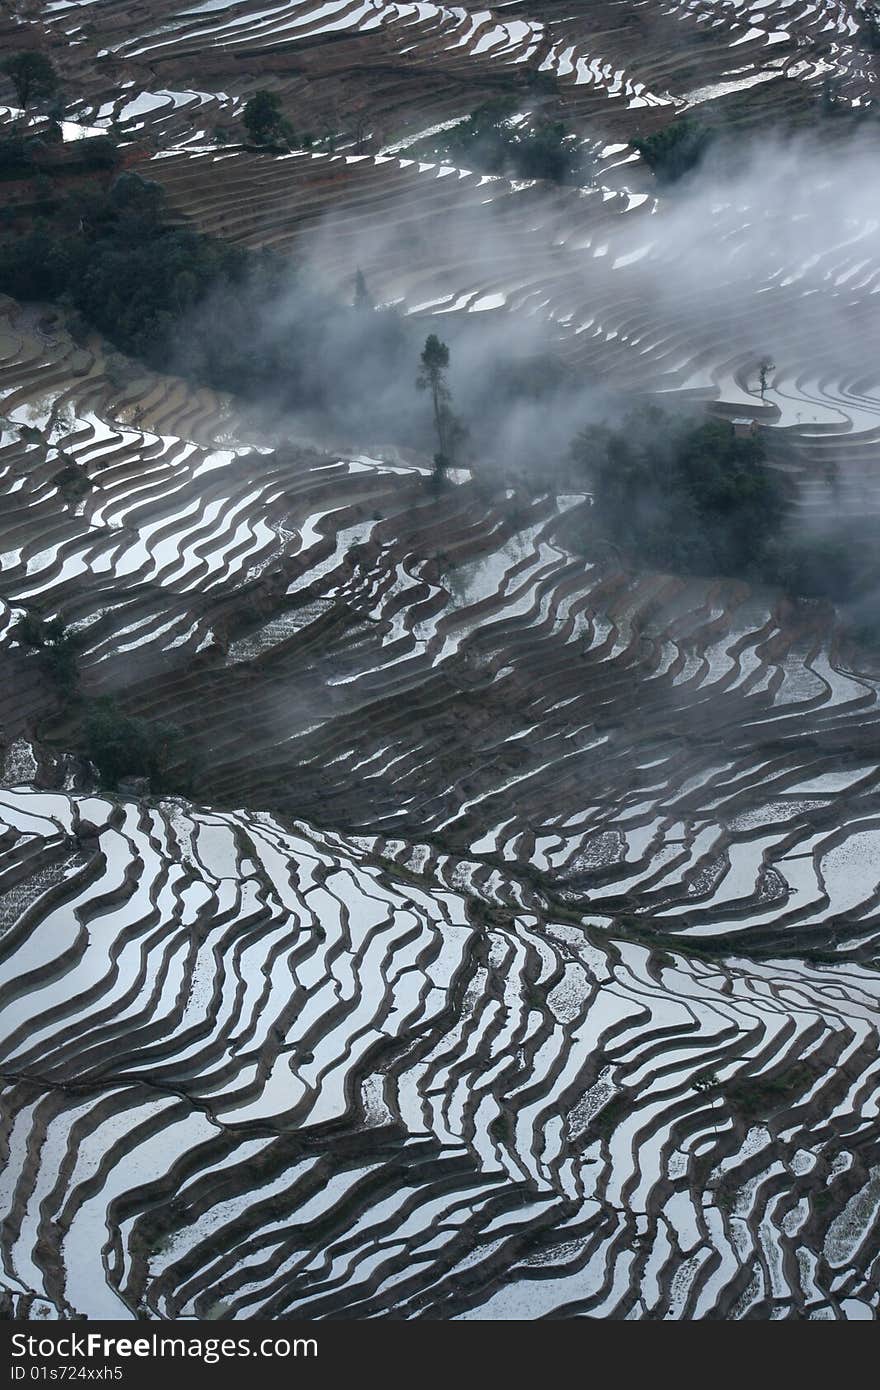 Sky reflected on rice terraces' water, Yuanyang, China